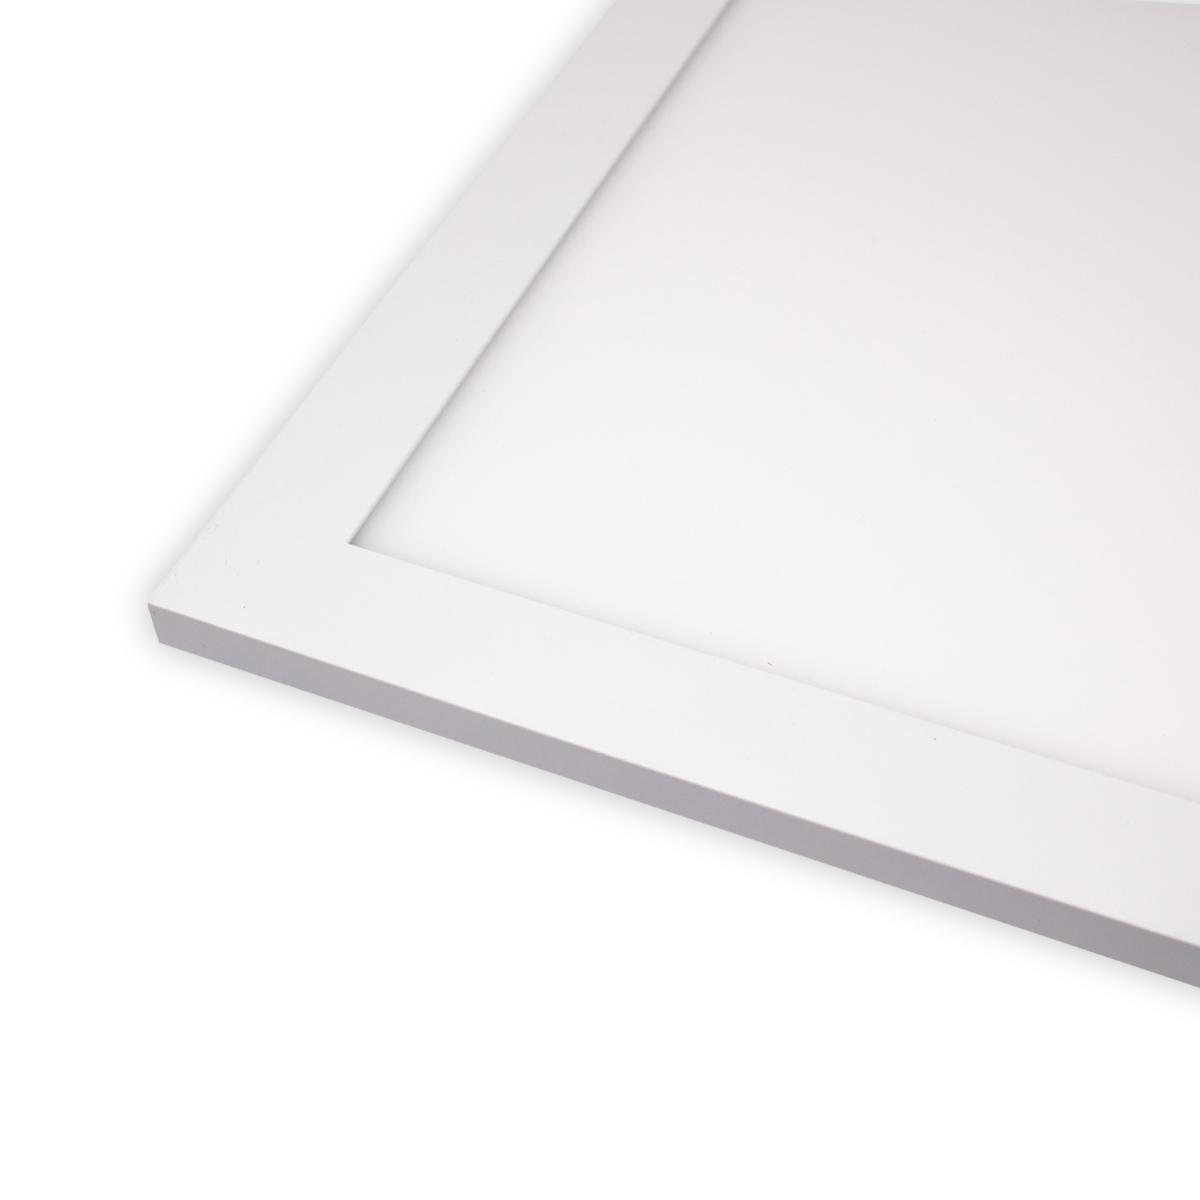 RGB+CCT LED Panel 30x30cm inkl. MiBoxer Smarthomesteuerung 18W 24V Rahmen weiß - Panelmontage:  Aufbaurahmen Click weiß